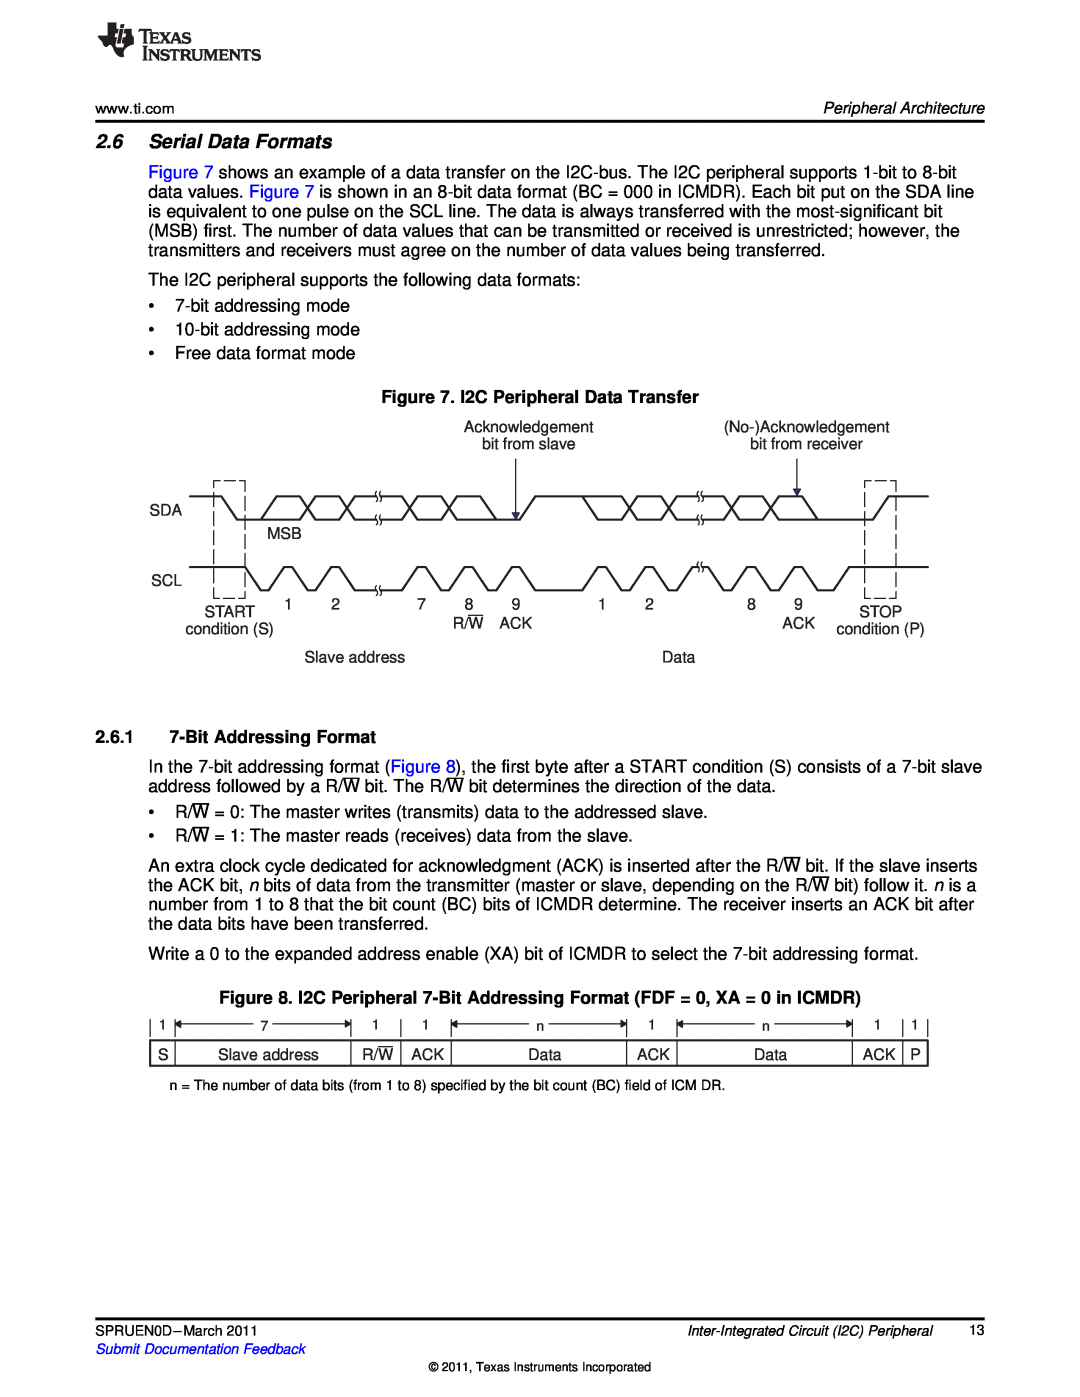 Texas Instruments TMS320C642X manual 2.6Serial Data Formats, I2C Peripheral Data Transfer, BitAddressing Format 